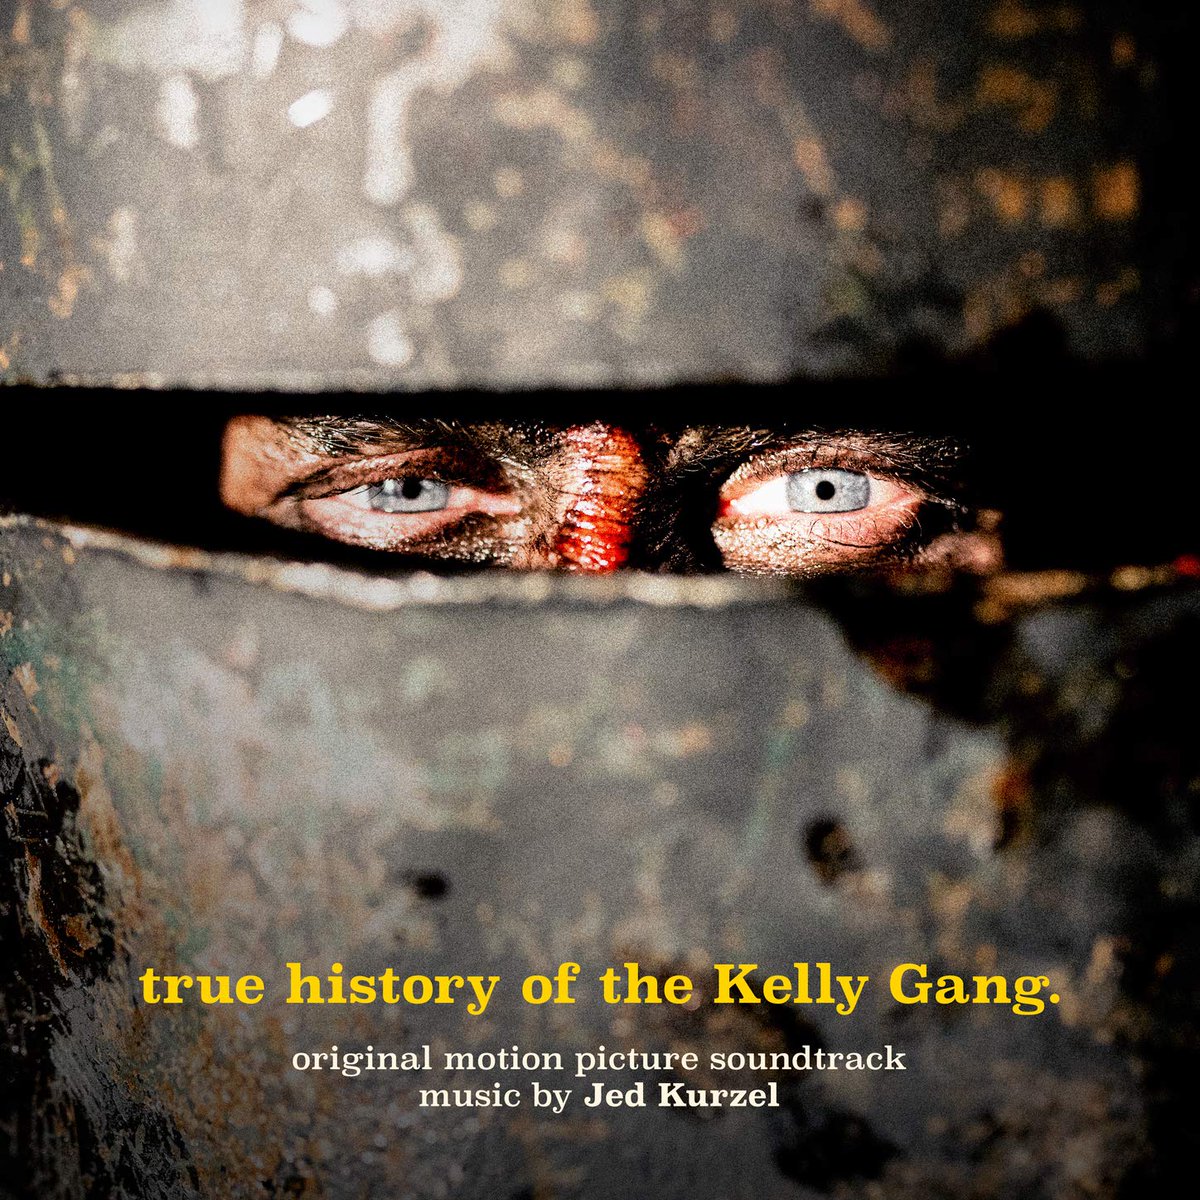 🎵 ‘True History of the Kelly Gang’ – Original Motion Picture Soundtrack Composed by Jed Kurzel – Now Available:

@AppleMusic: apple.co/2FEEk7U
@Amazon: amzn.to/2QIkTBj
@Spotify: spoti.fi/2FFmW2U

#TrueHistoryoftheKellyGang #NedKelly #JedKurzel #JustinKurzel